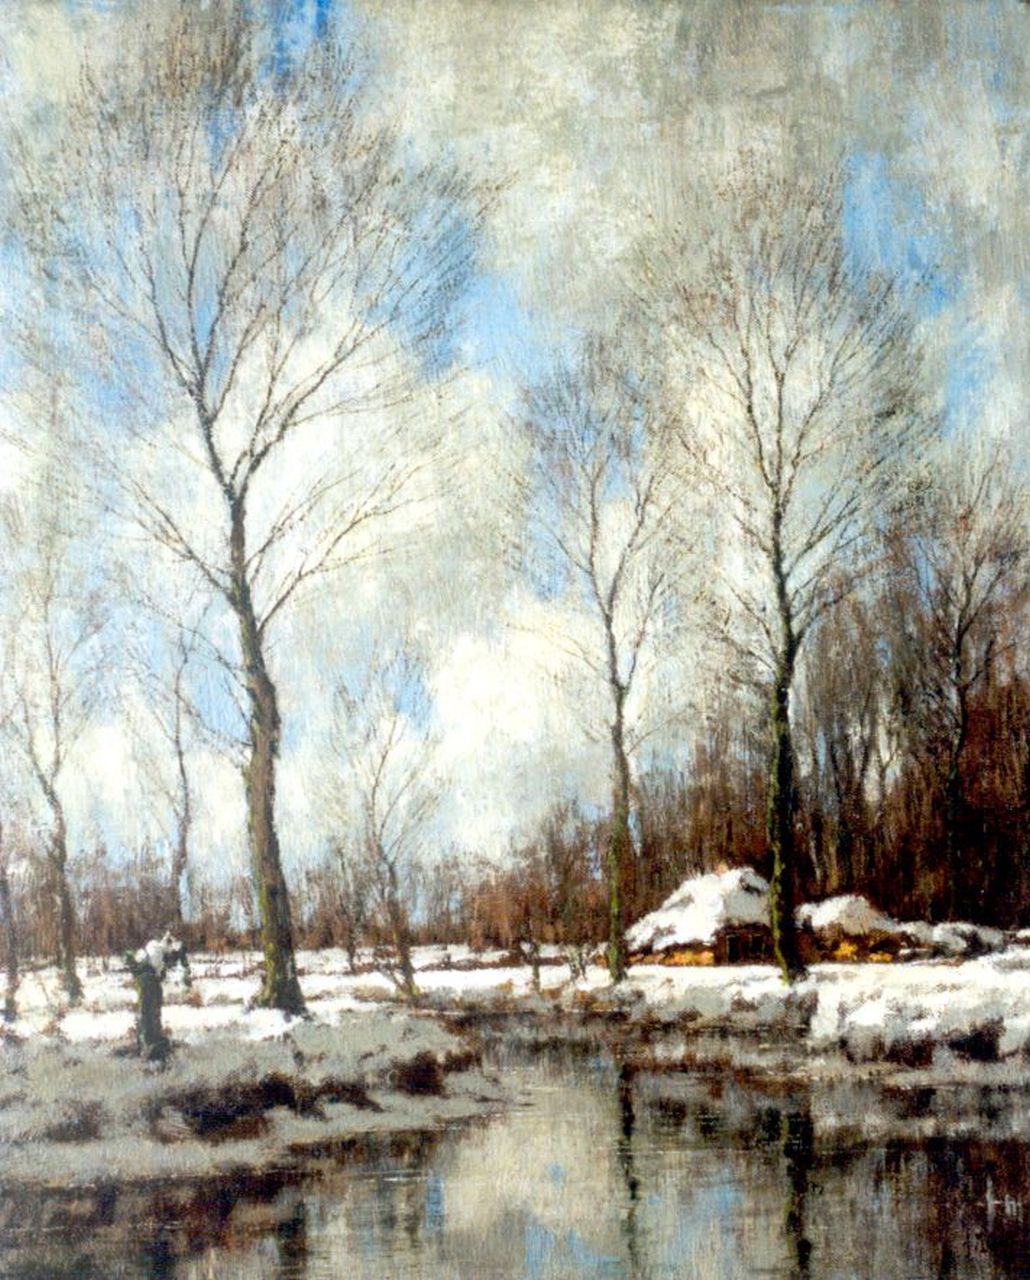 Gorter A.M.  | 'Arnold' Marc Gorter, Winter landscape with the Vordense beek (counterpart of inventory number 6001), Öl auf Leinwand 56,5 x 46,5 cm, signed l.r.